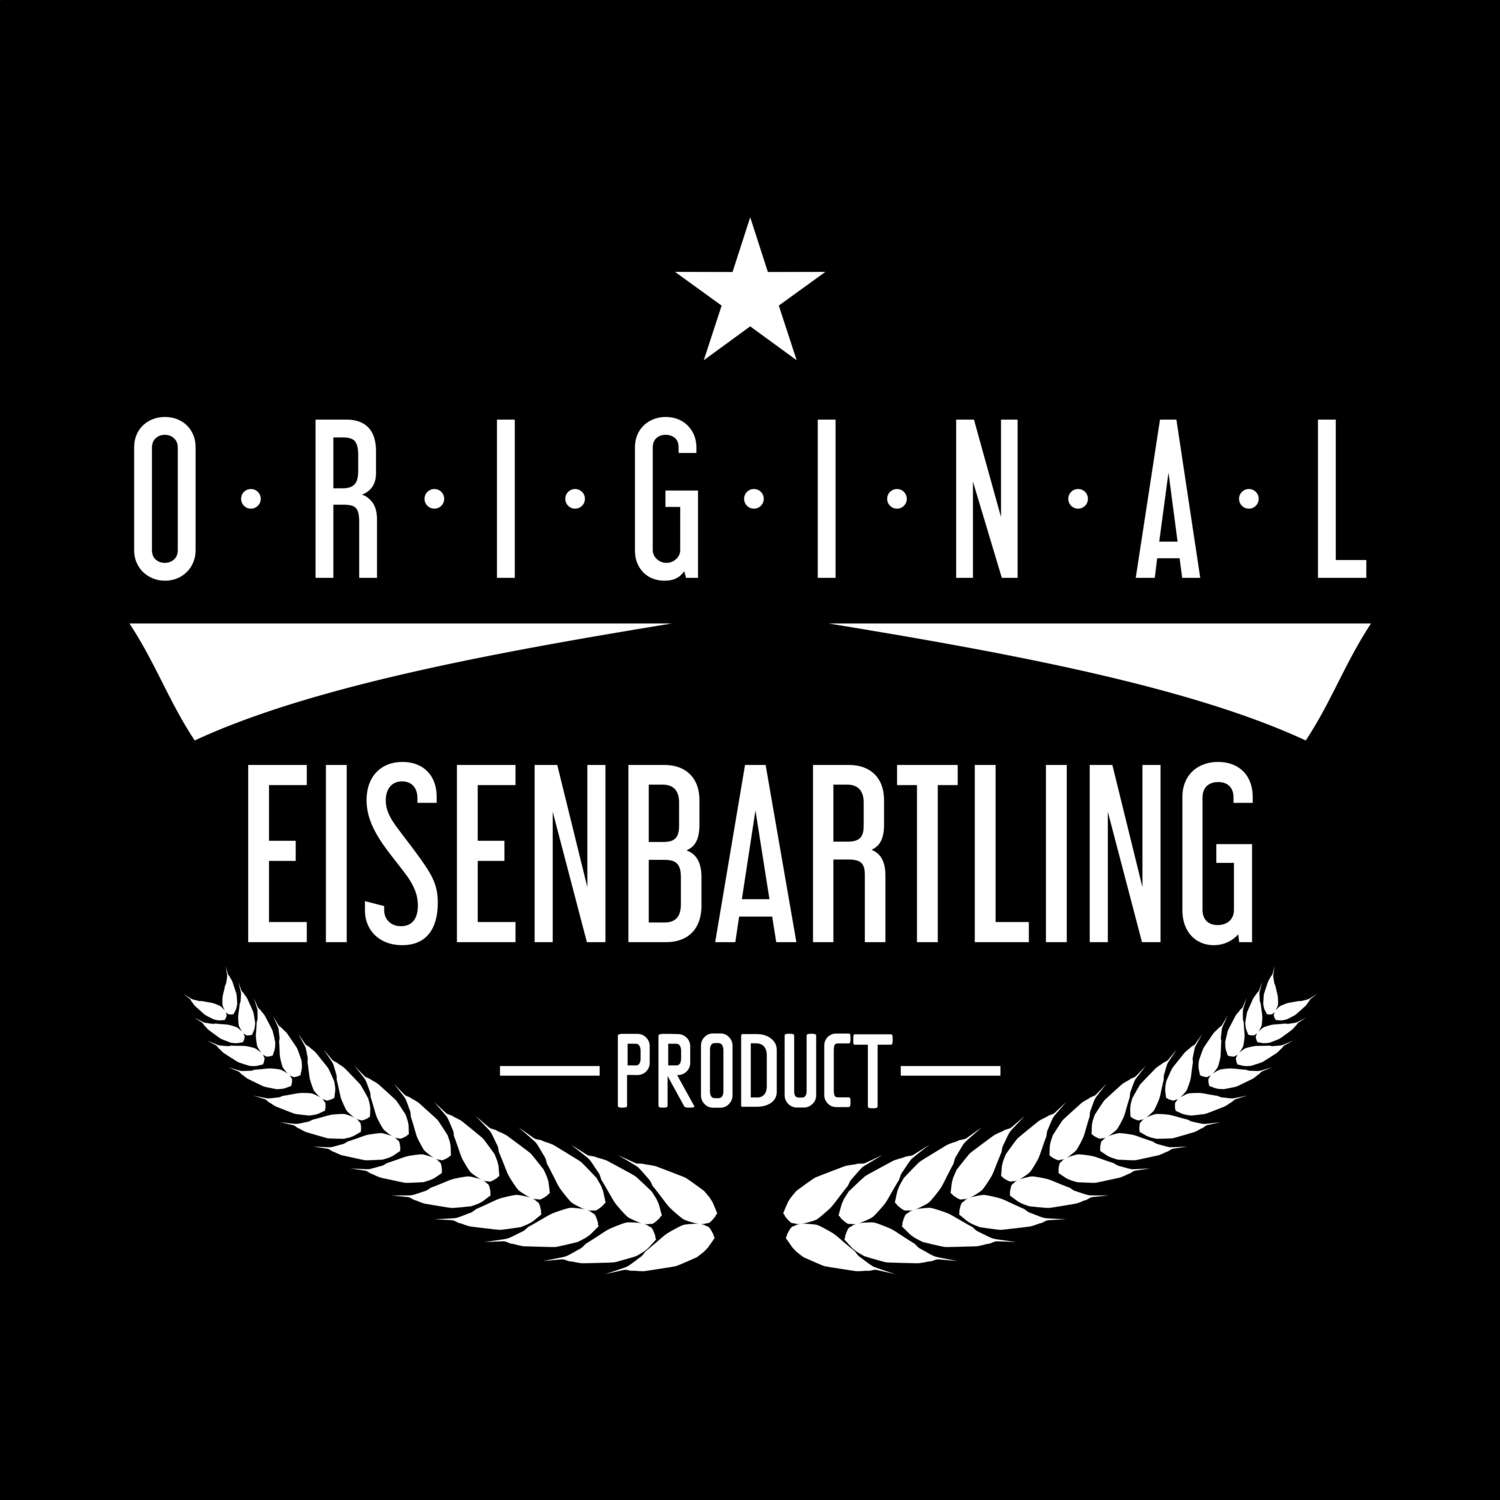 Eisenbartling T-Shirt »Original Product«